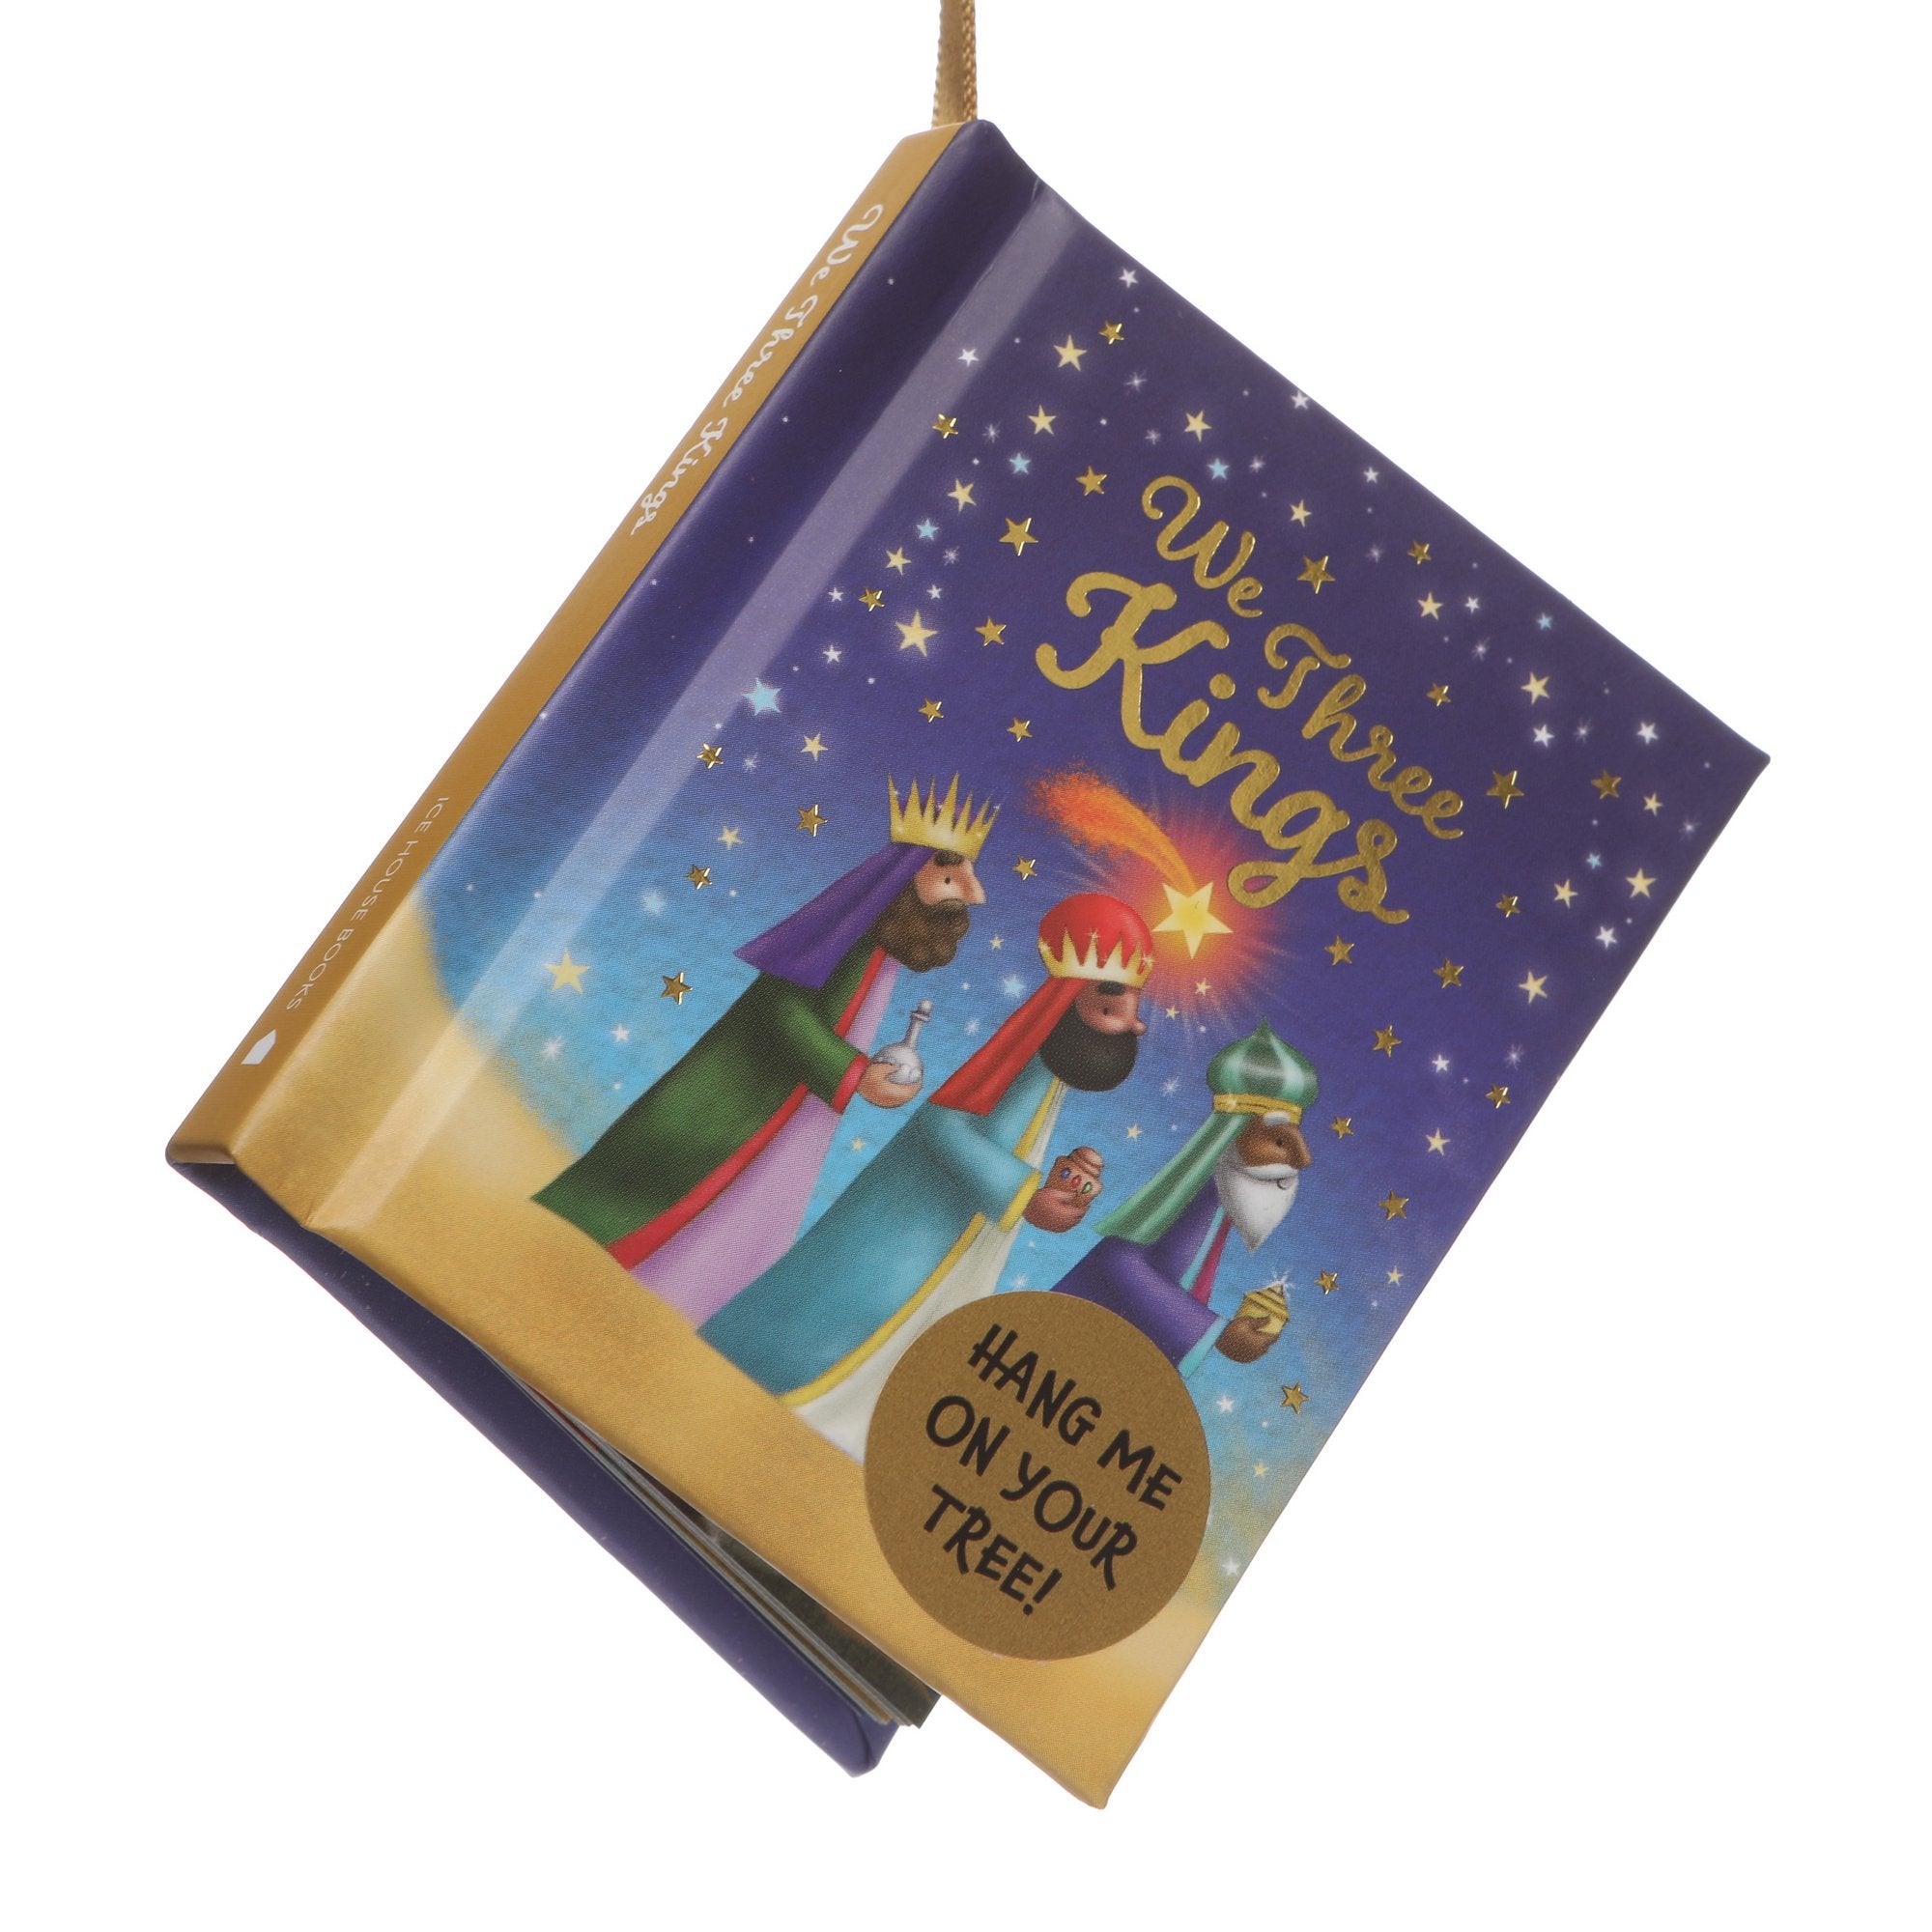 Christmas Giftbook - We Three Kings